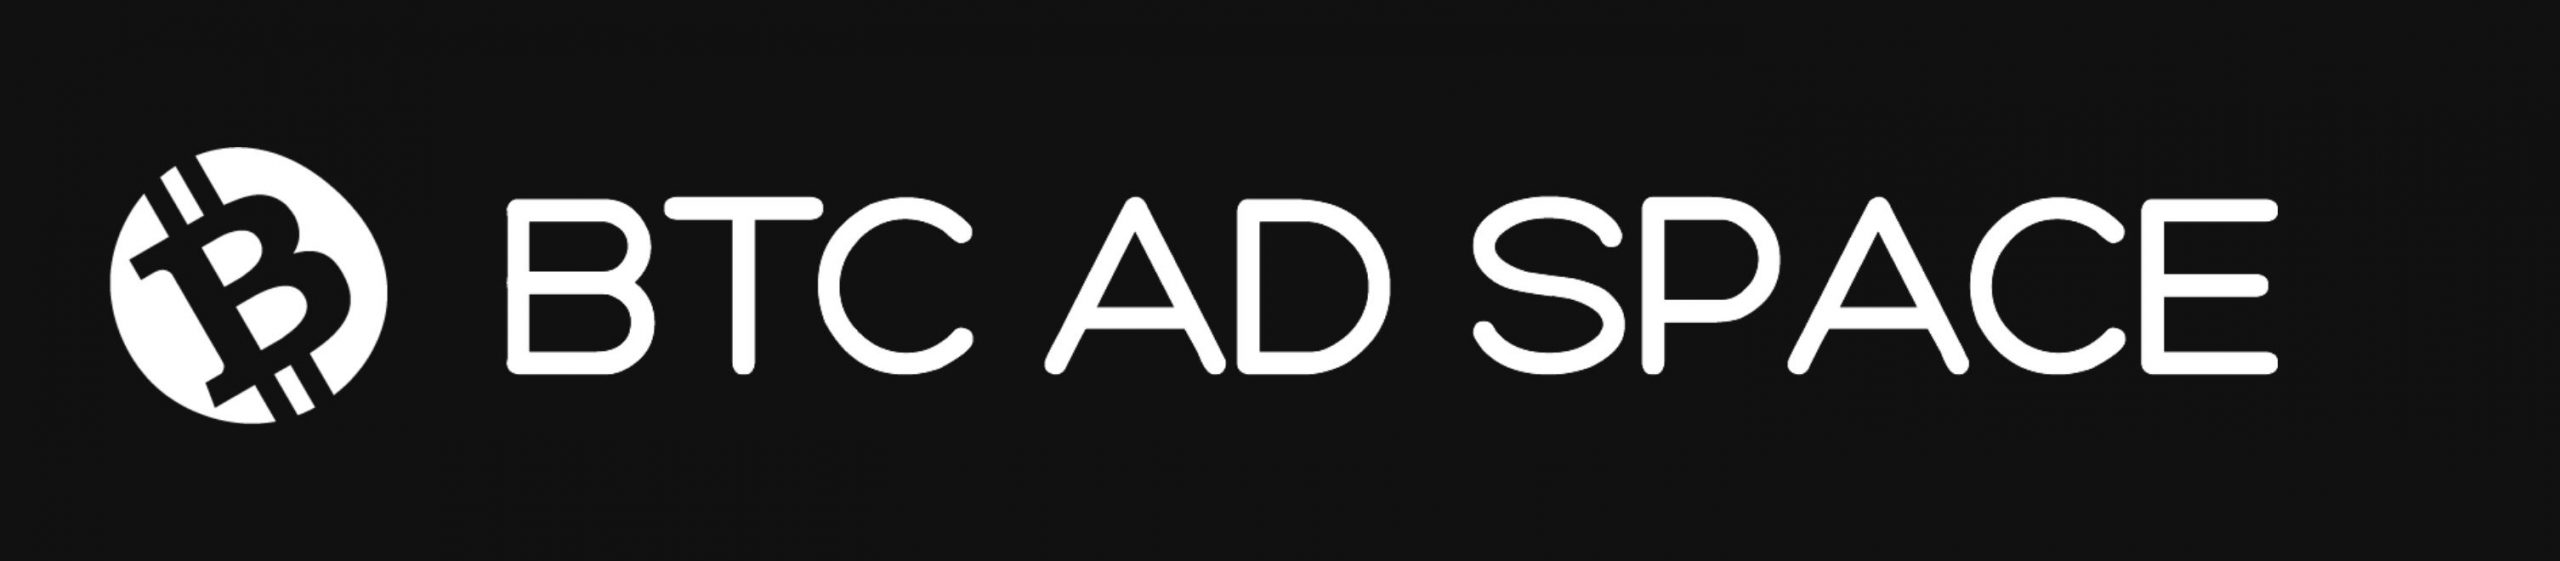 BTC Ad Space banner logo